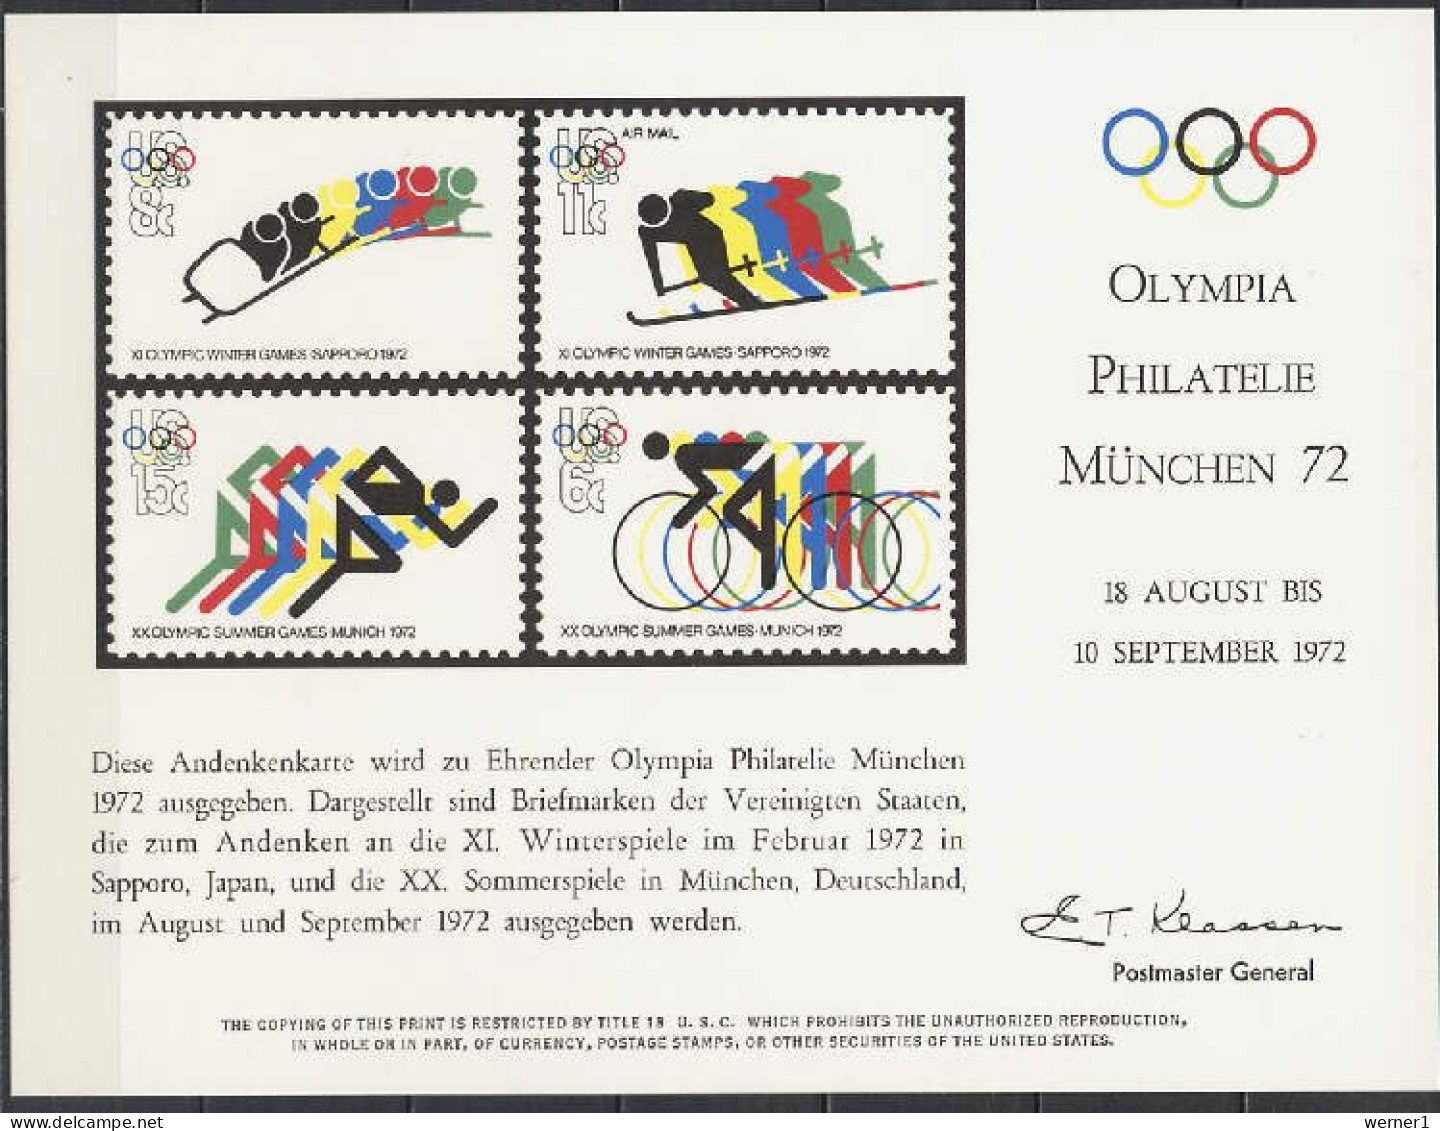 USA 1972 Olympic Games Munich / Sapporo, Cycling Etc. Commemorative Print - Ete 1972: Munich